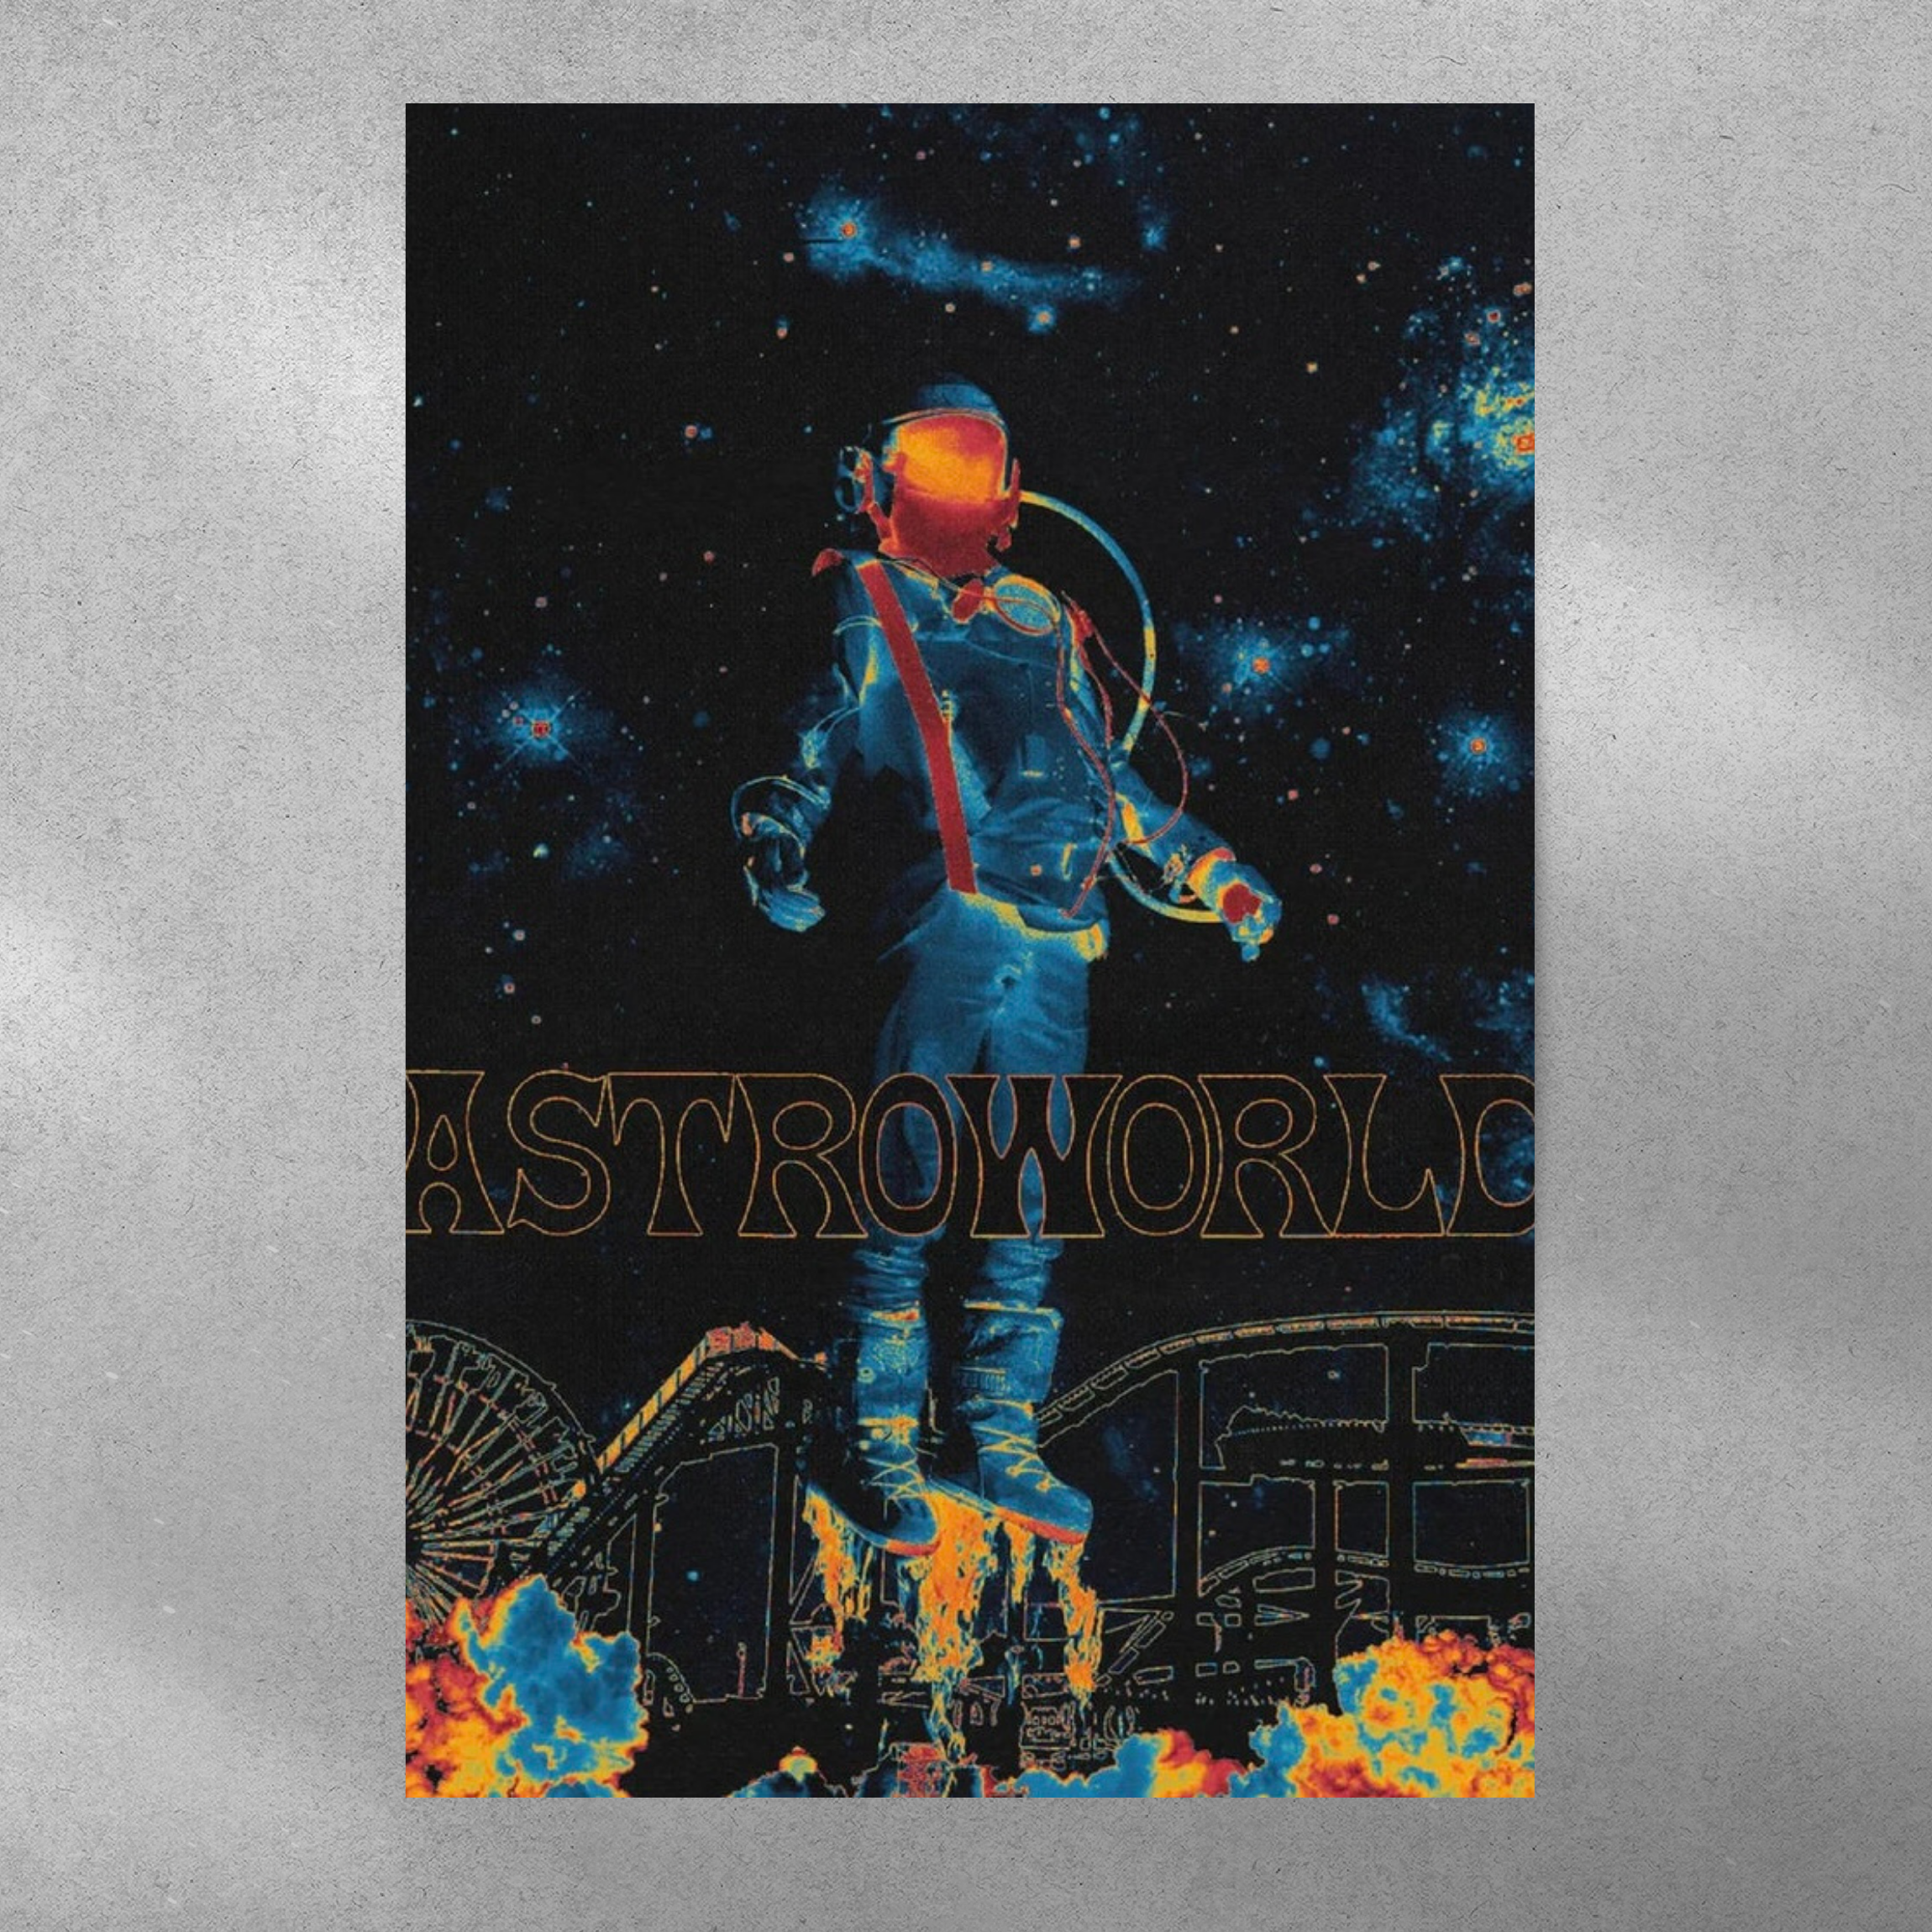 AstroWorld